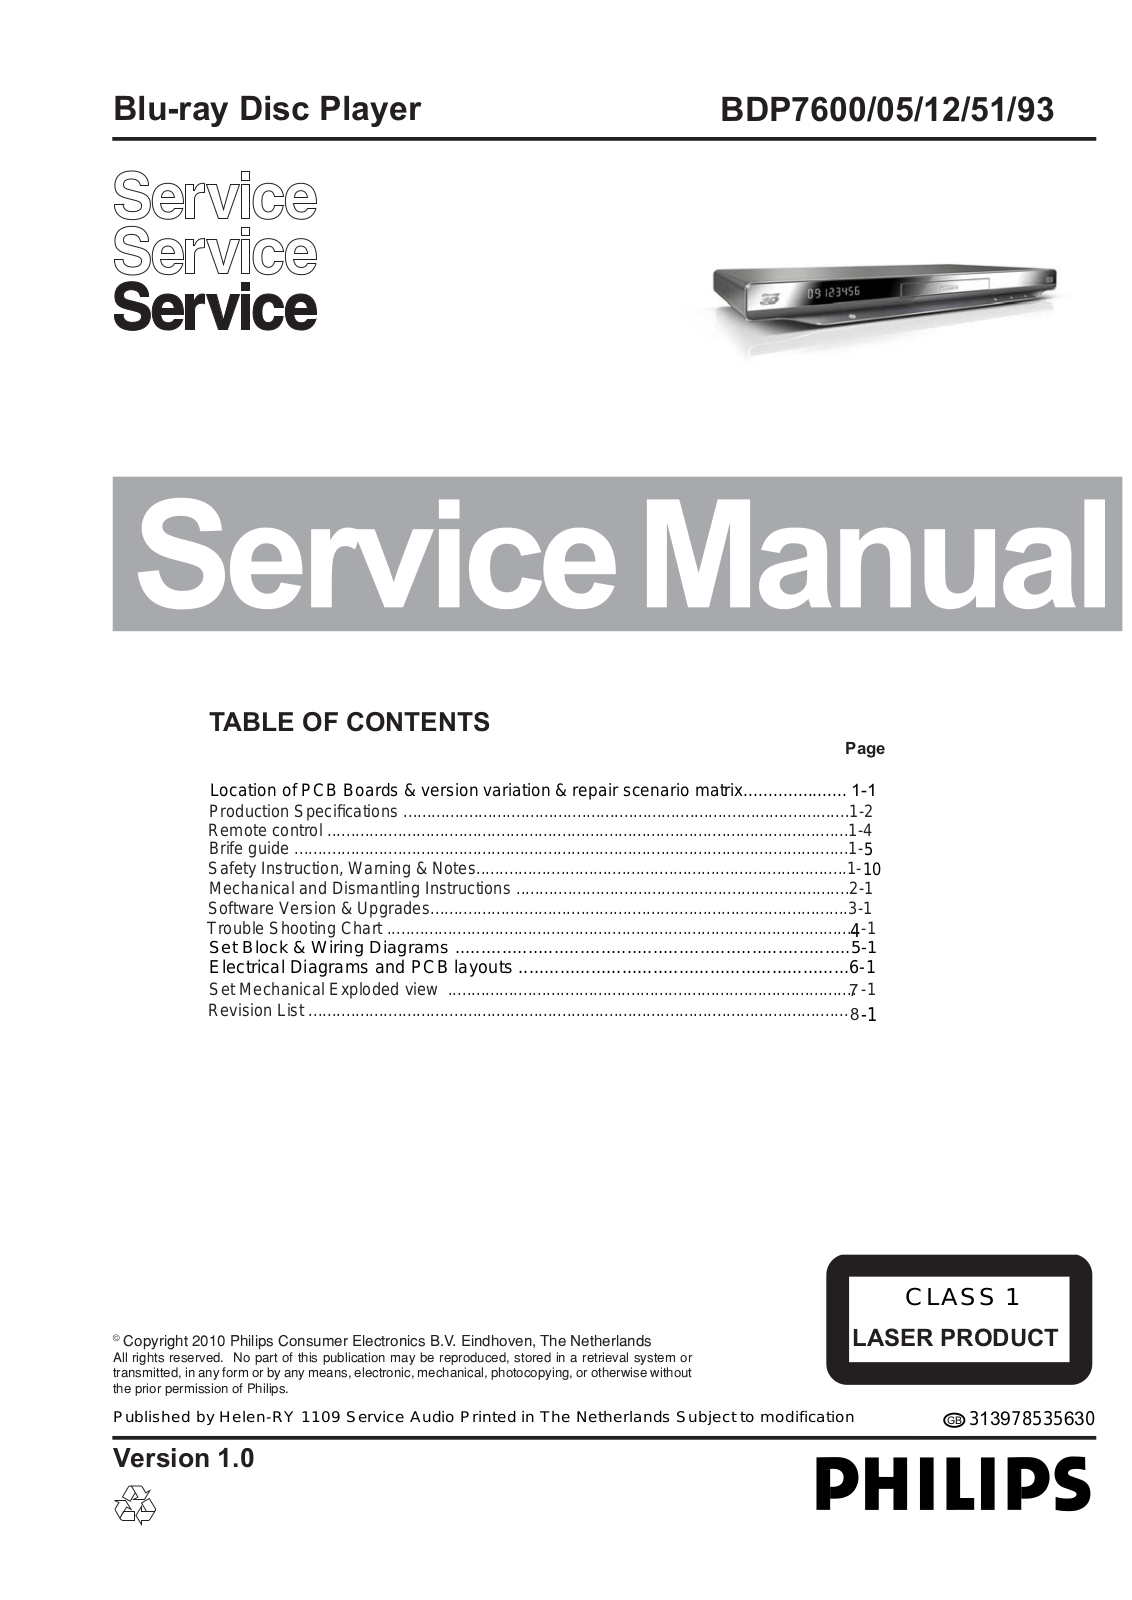 Philips BDP-7600 Service Manual